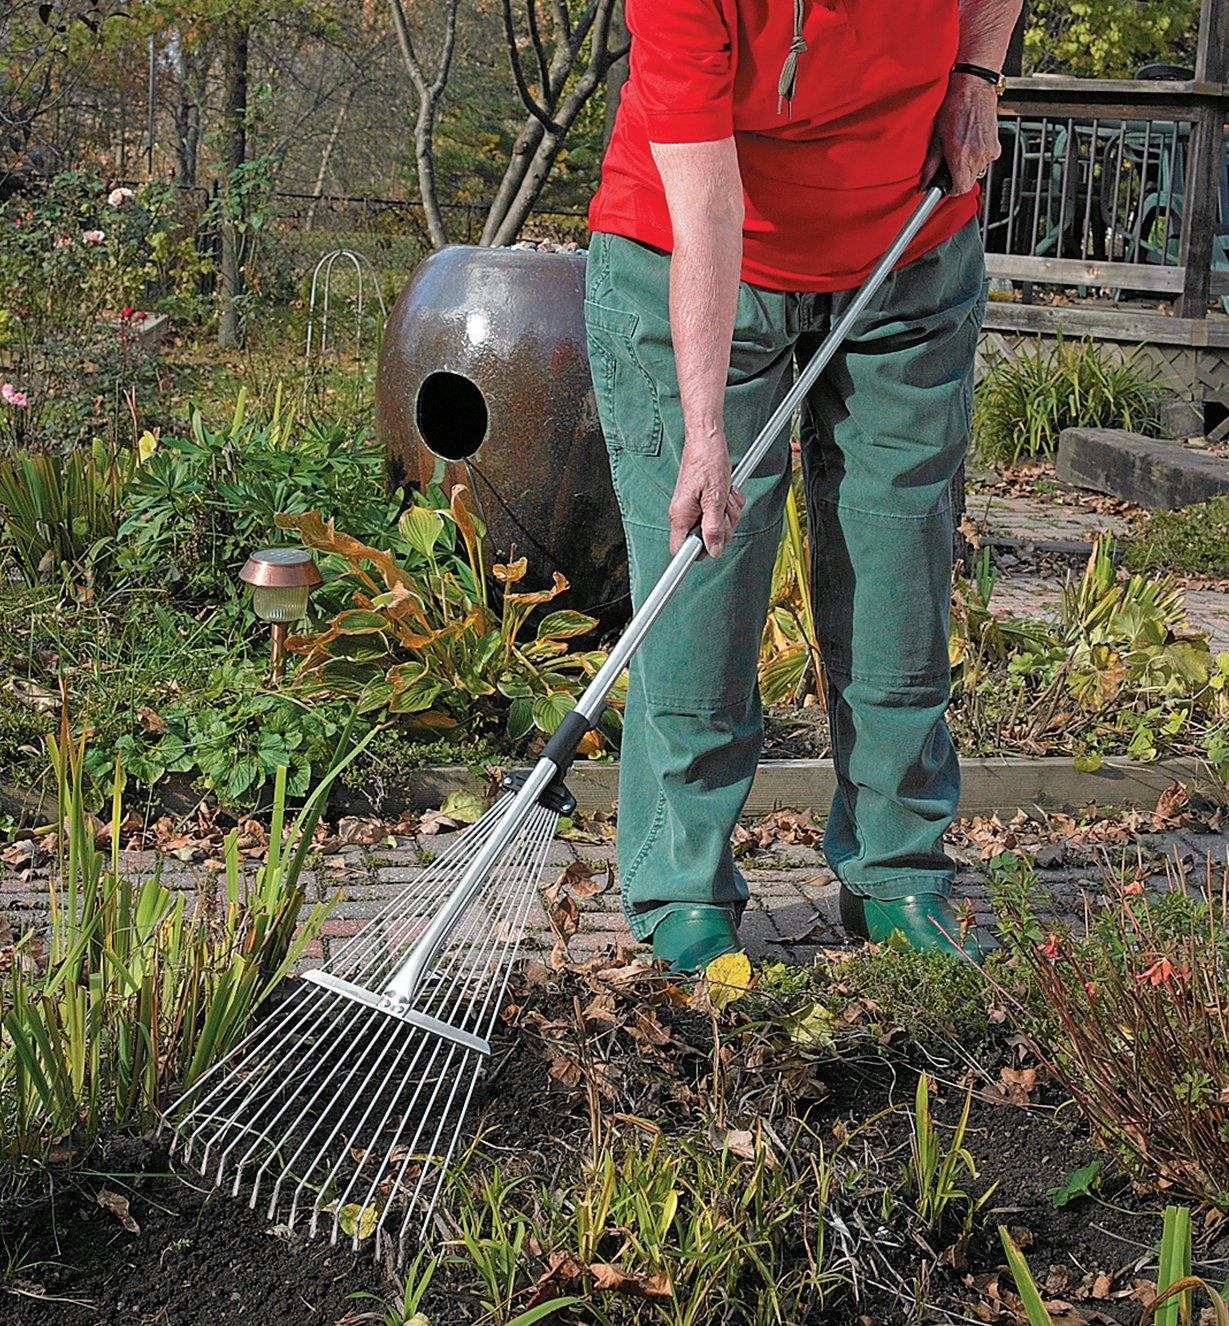 A woman rakes between garden plants using a Long-Handled Rake